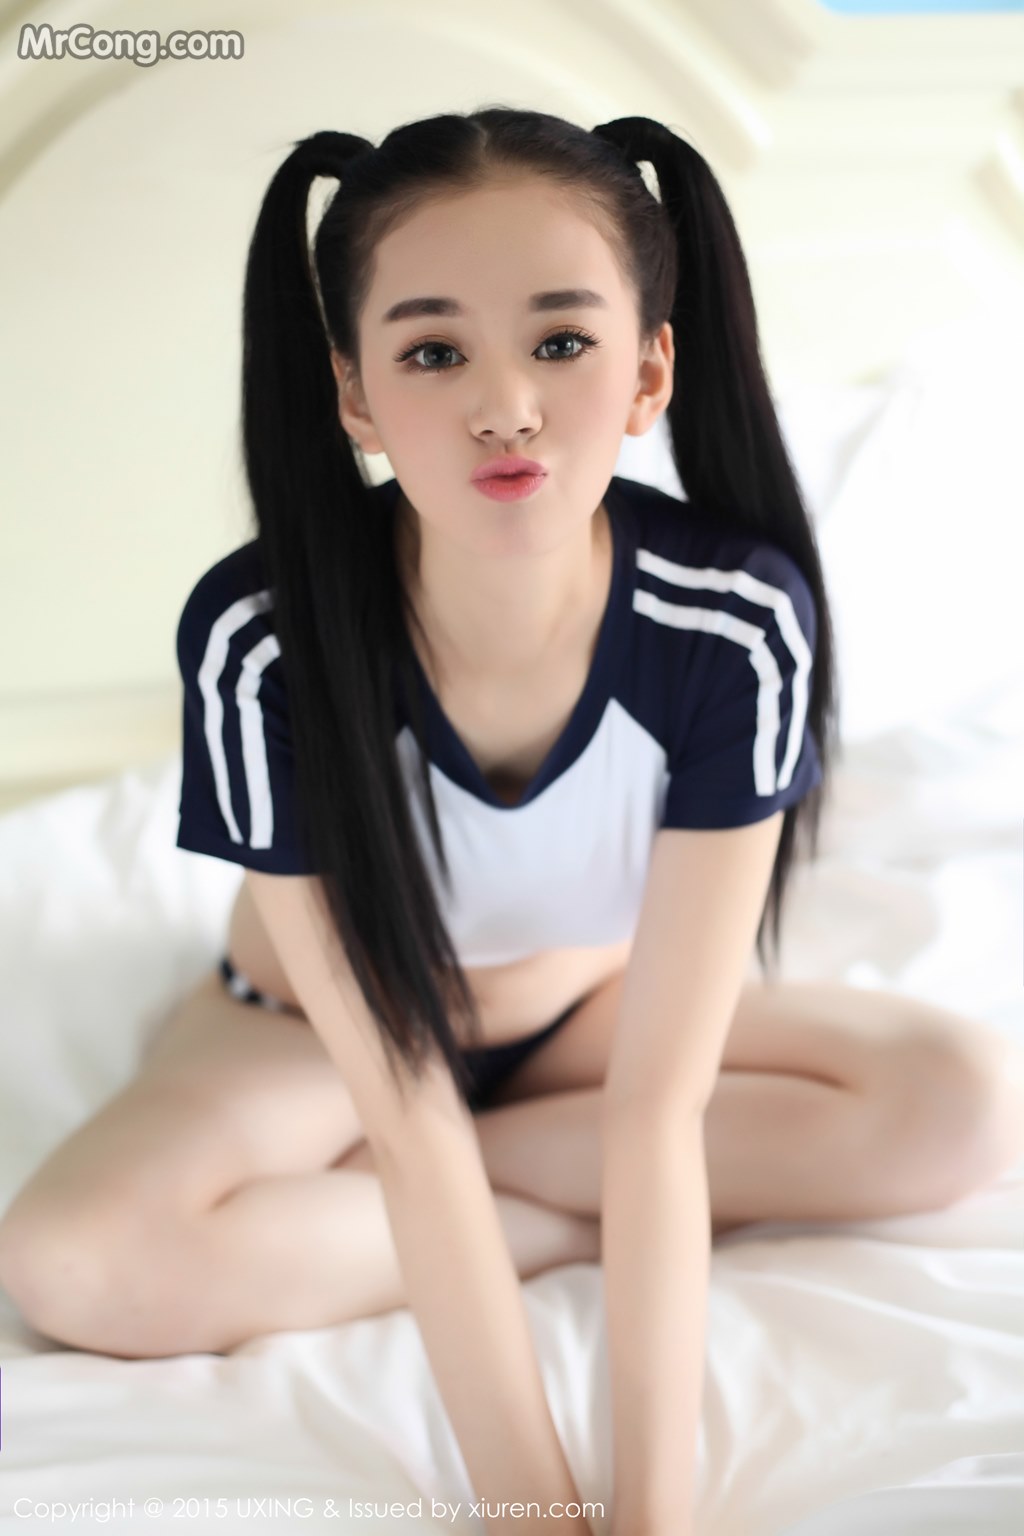 UXING Vol.027: Model Wen Xin Baby (温馨 baby) (45 pictures) photo 1-3